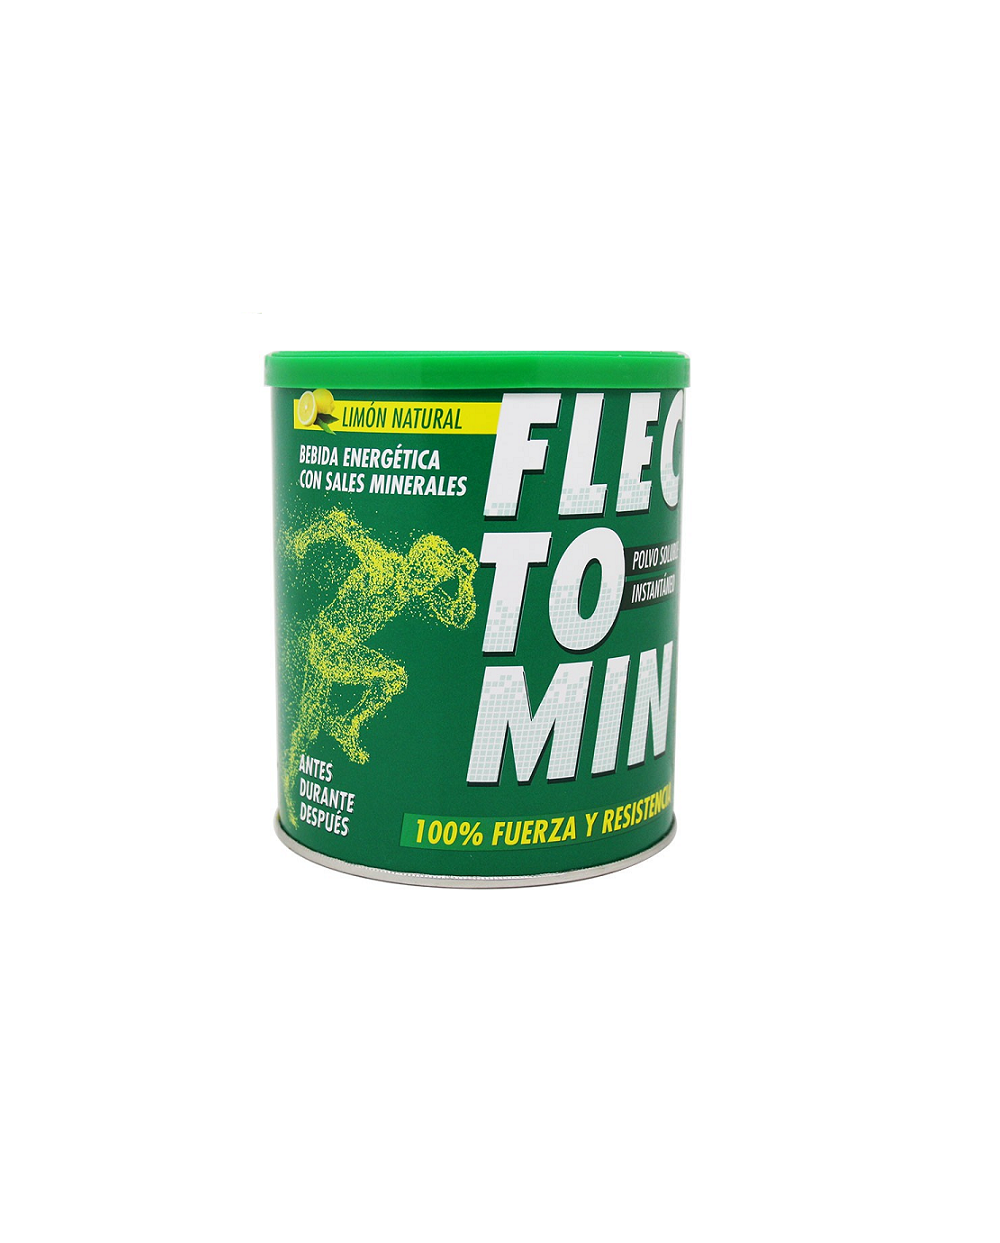 Flectomin - bebida energética en polvo - 550 g